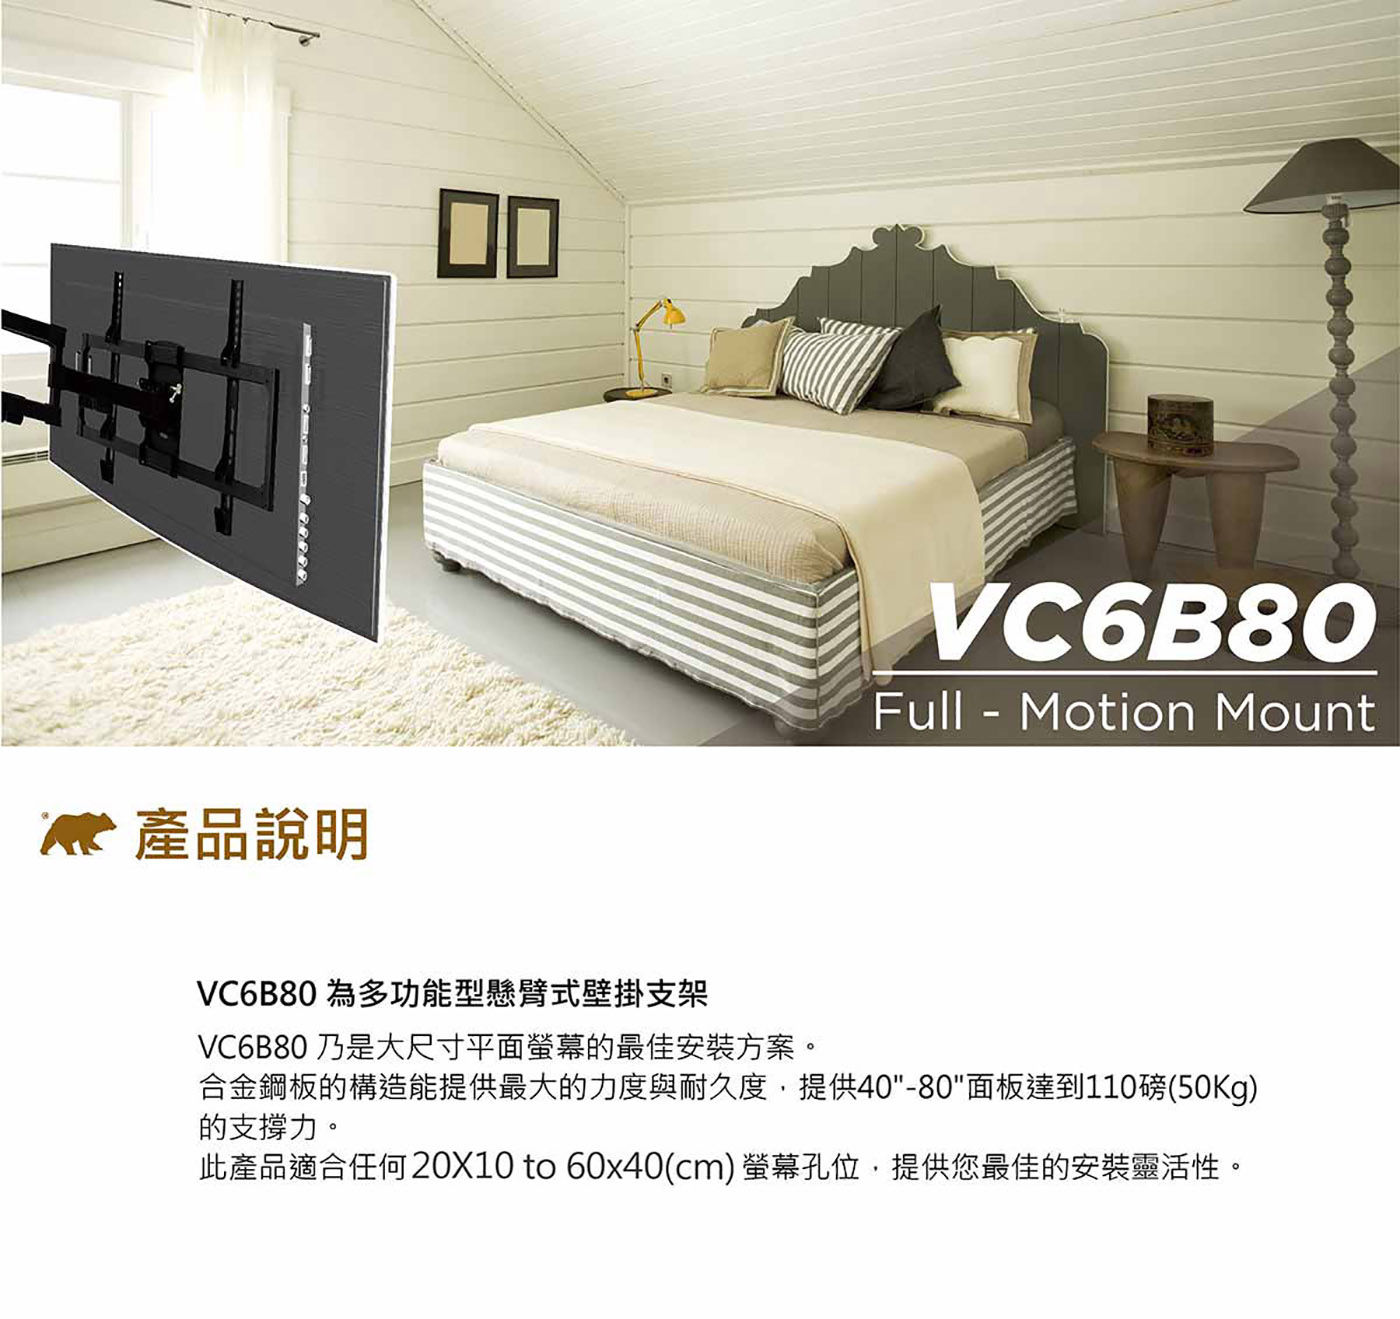 US Brown Bear壁掛架 VC6B80 適用40吋-80吋電視